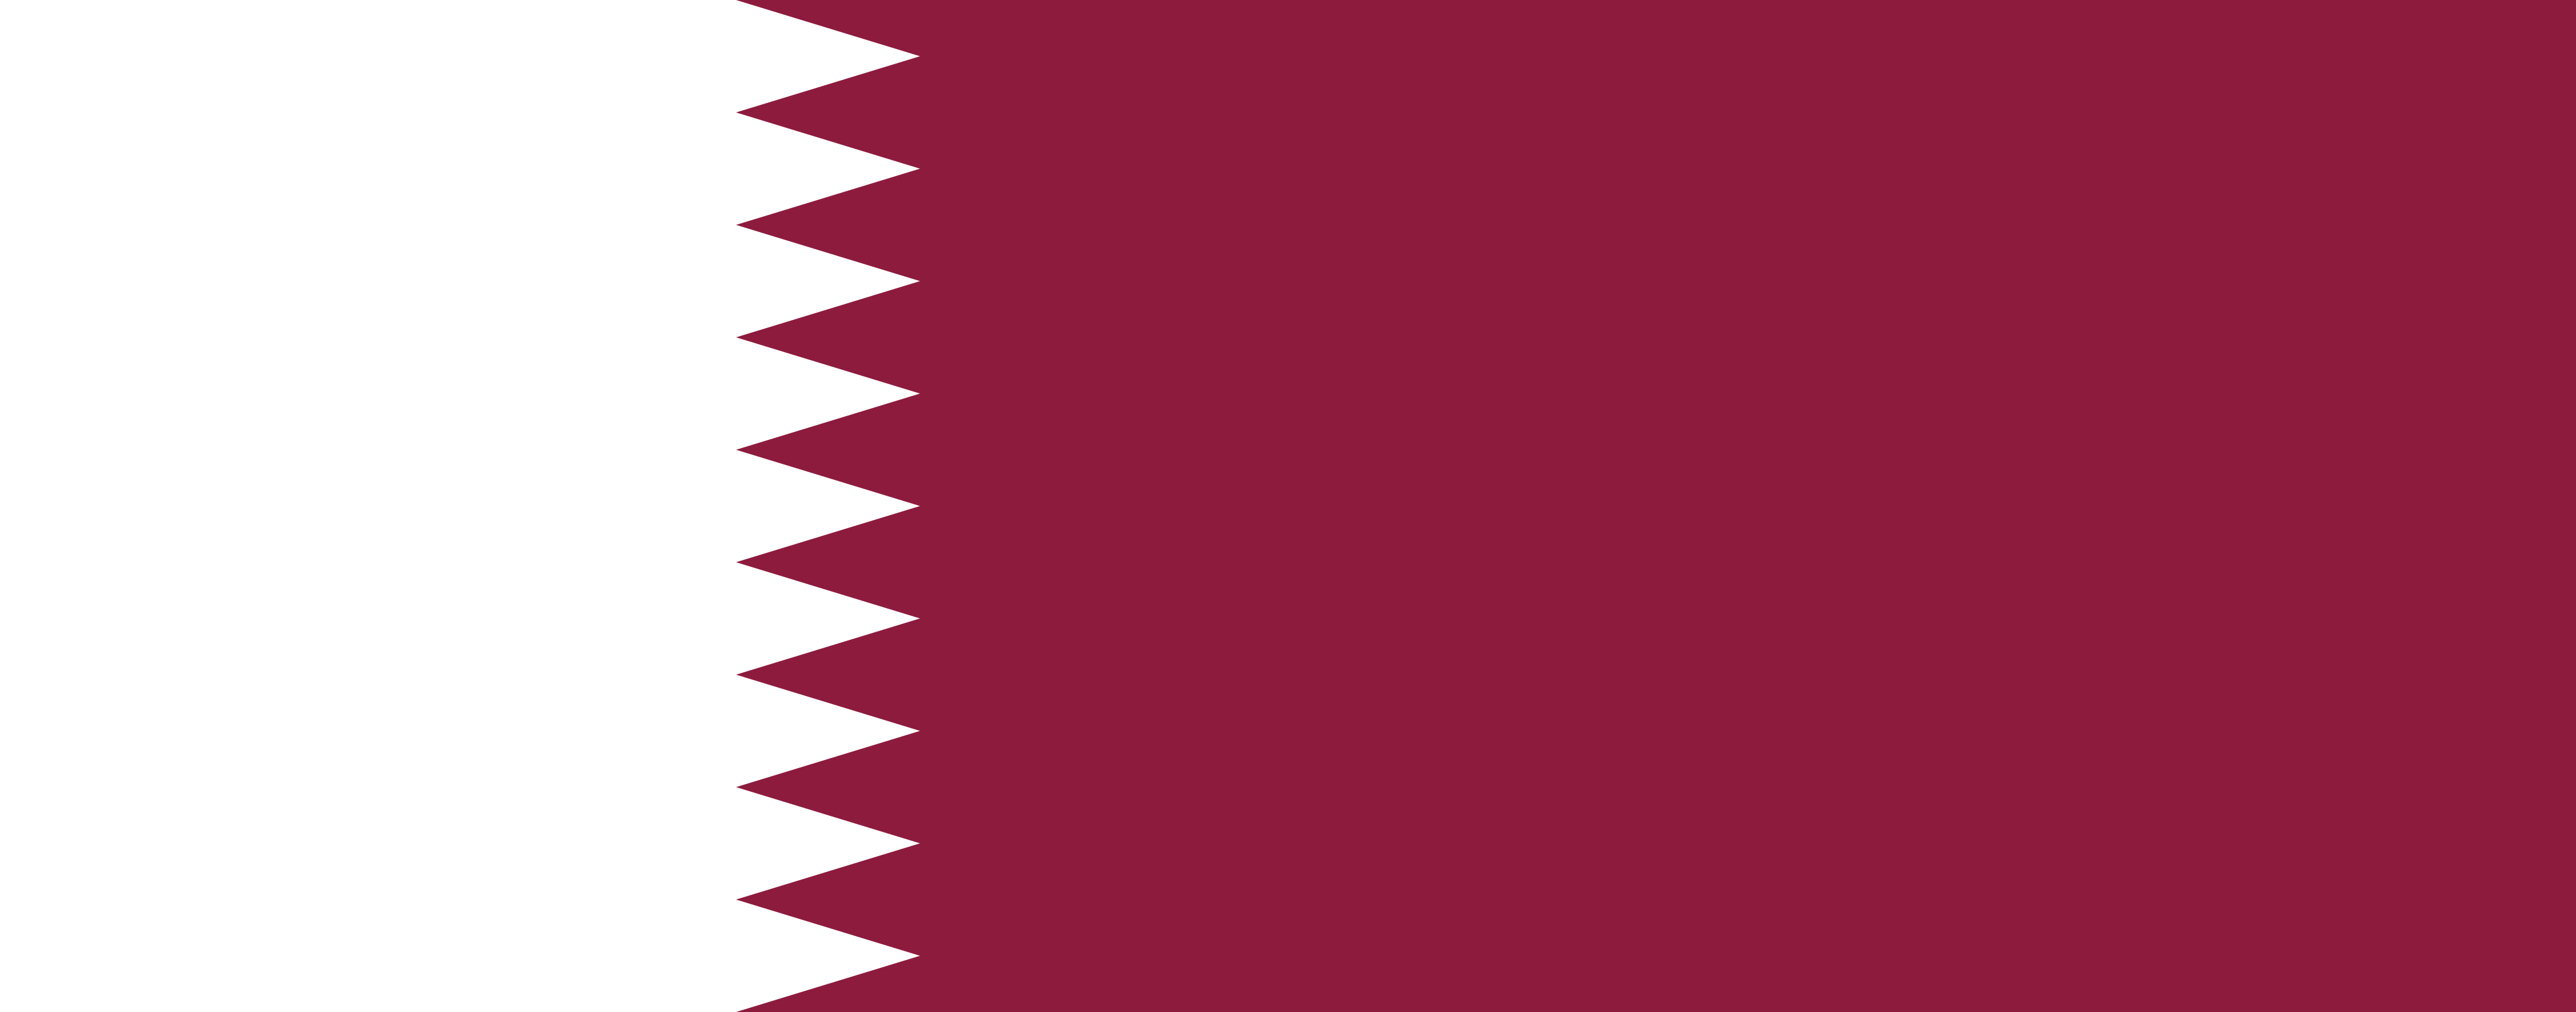 Qatar Flag Image - Free Download